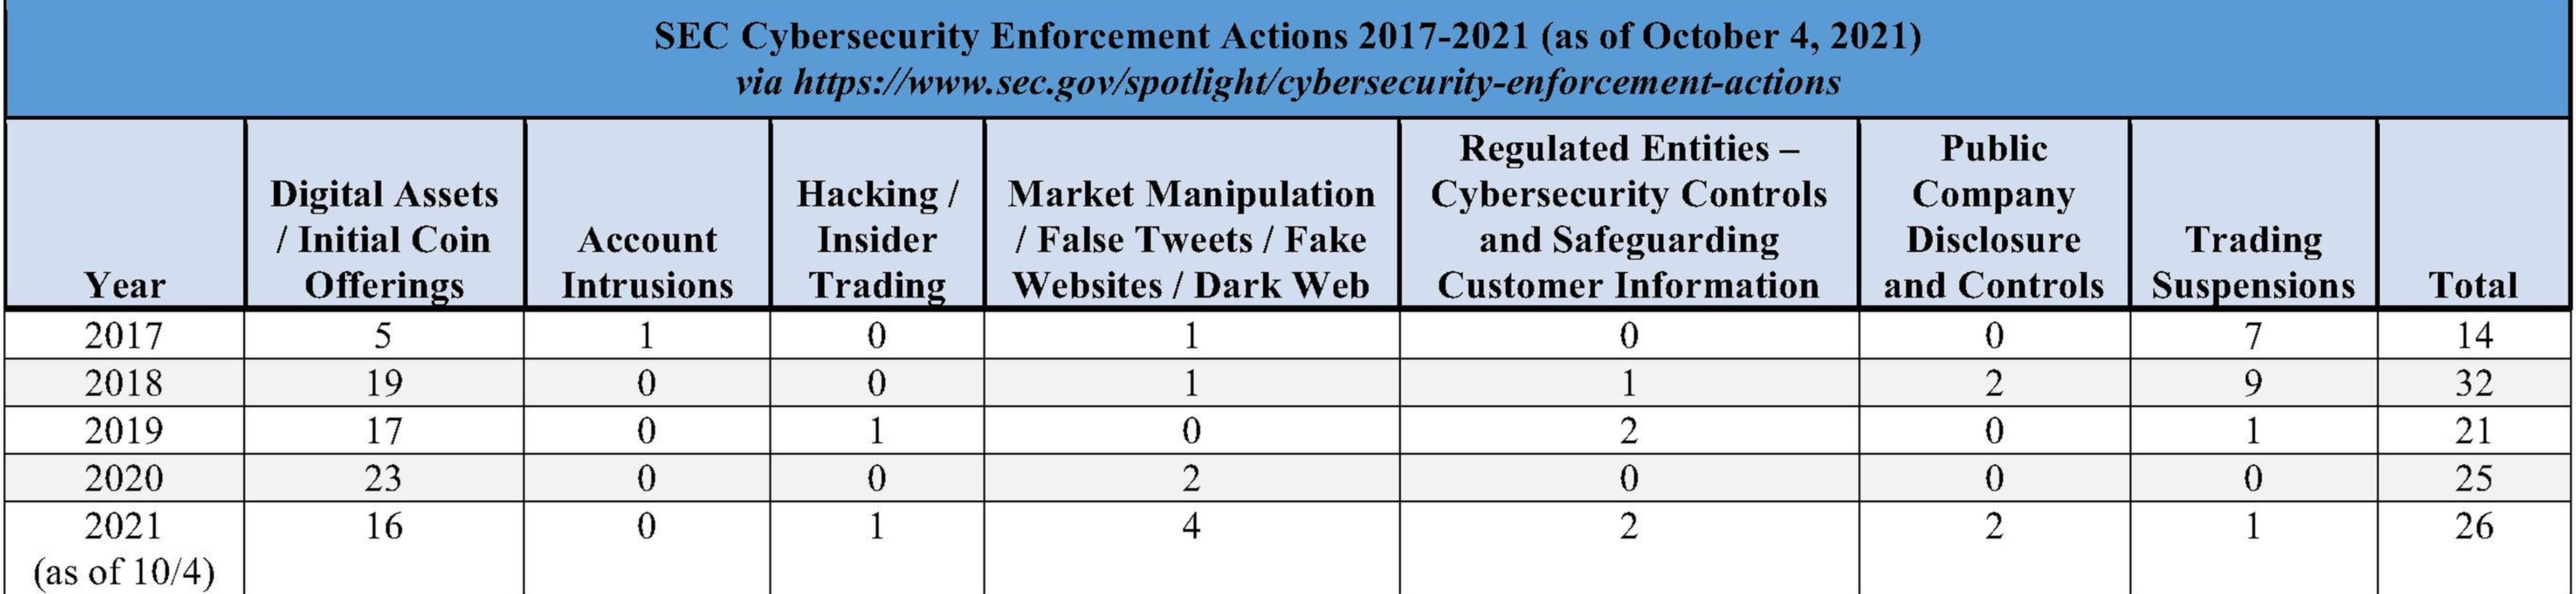 SEC Cybersecurity Enforcement Actions 2017-2021